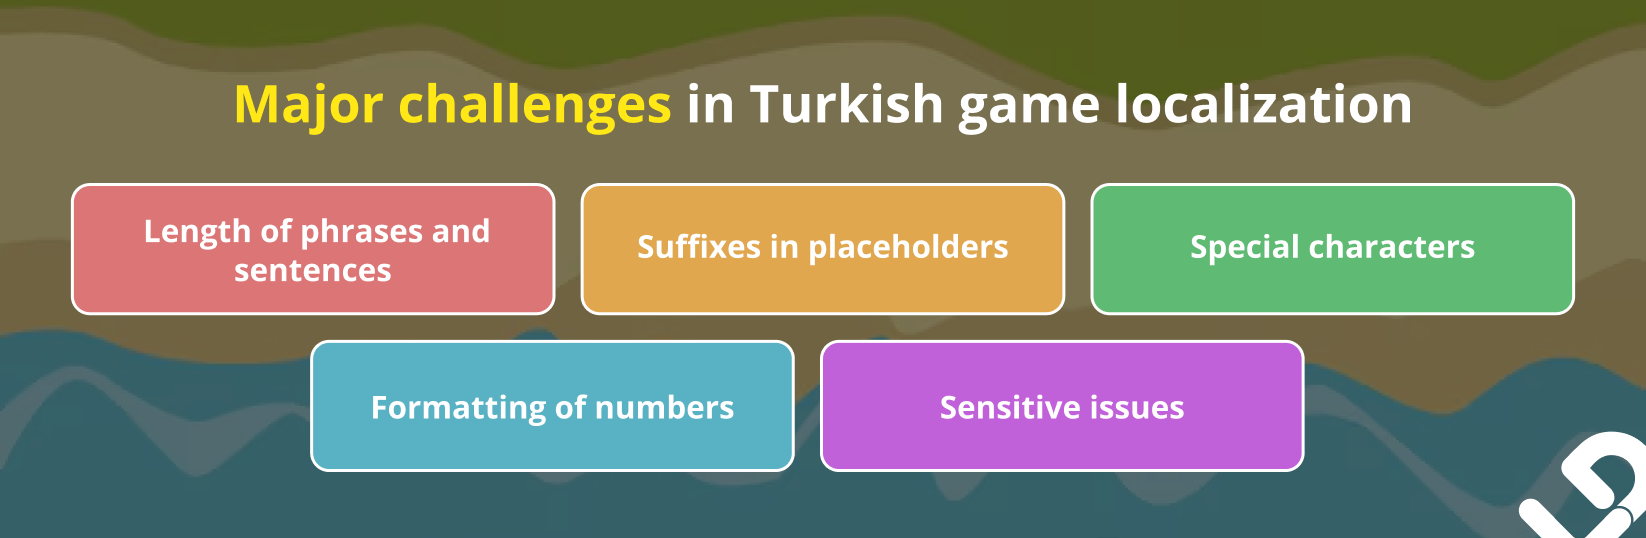 major-challenges-in-Turkish-game-localization